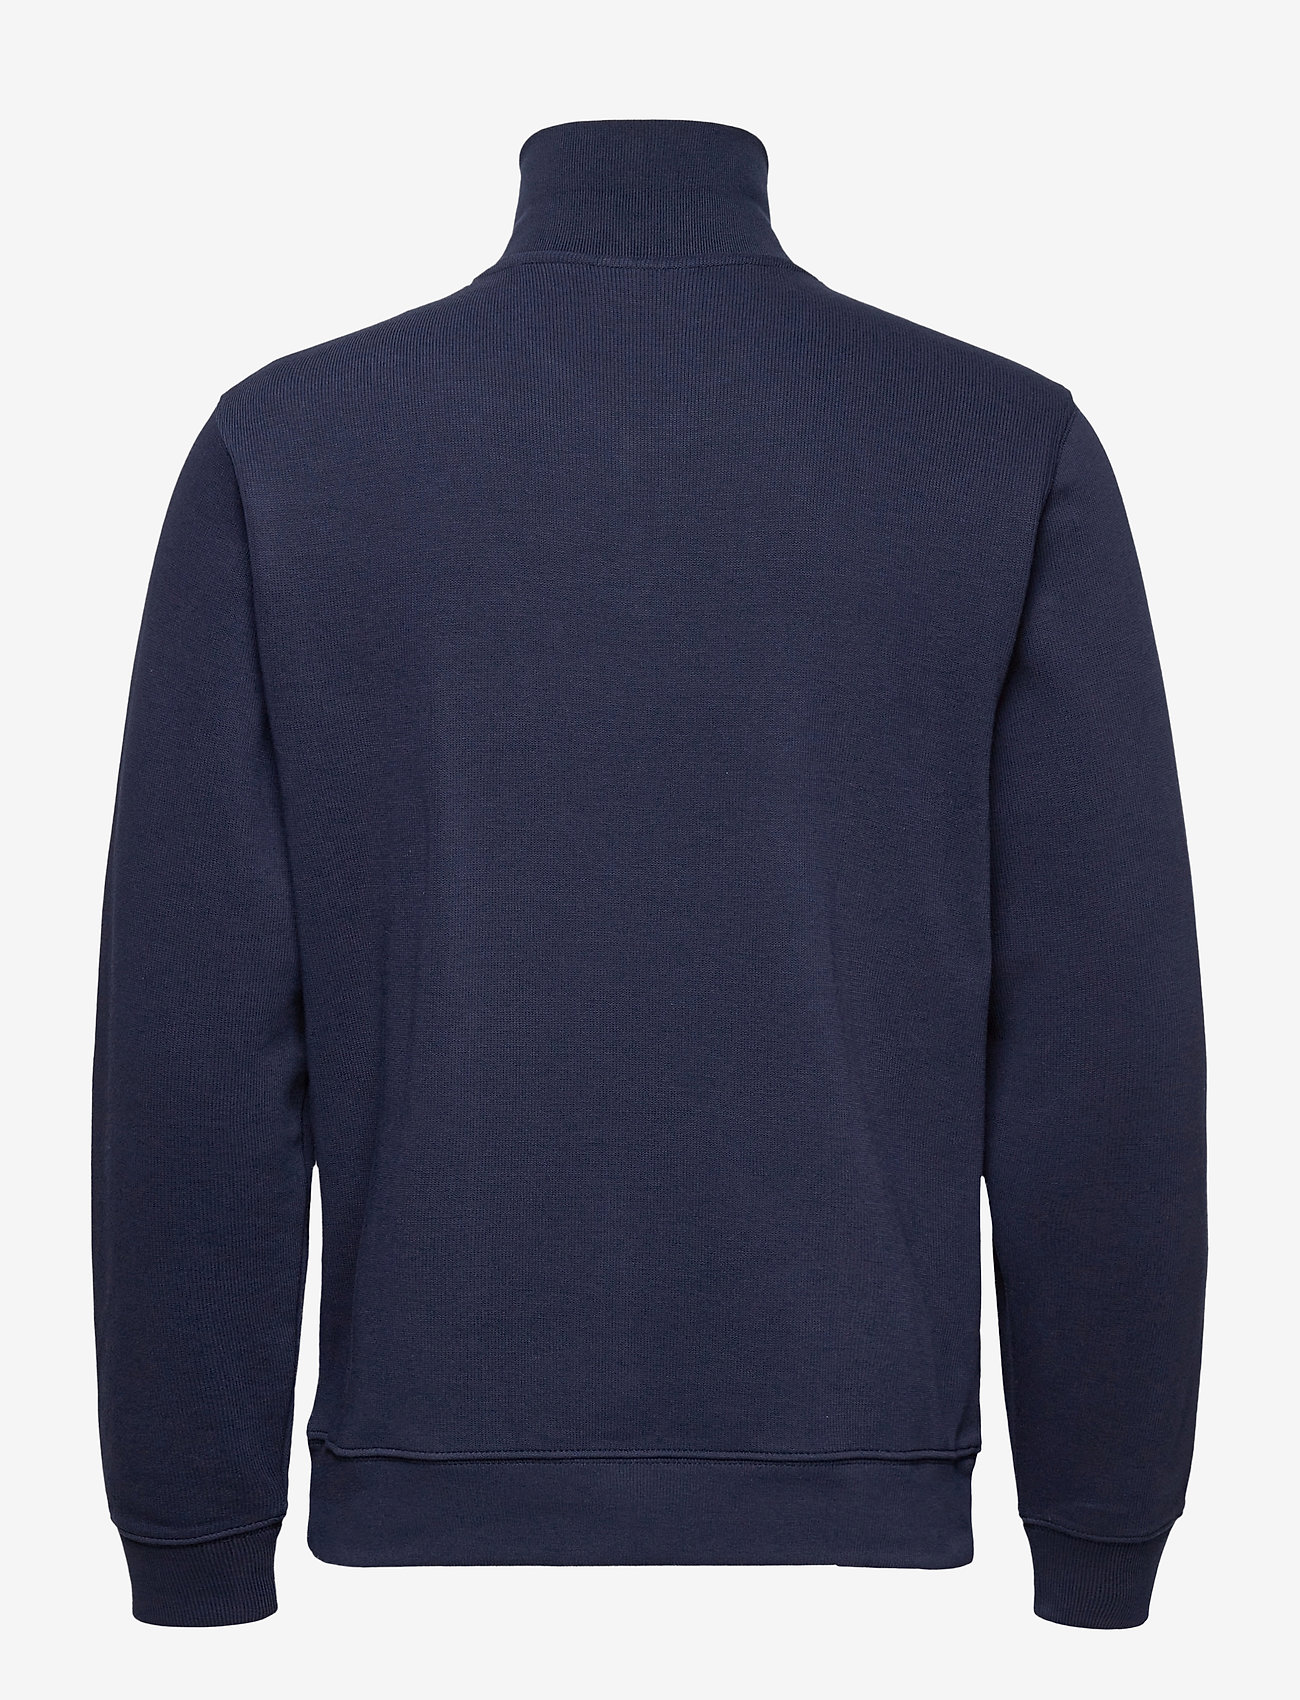 Lacoste Sweatshirts (Navy Blue) - 750 kr | Boozt.com